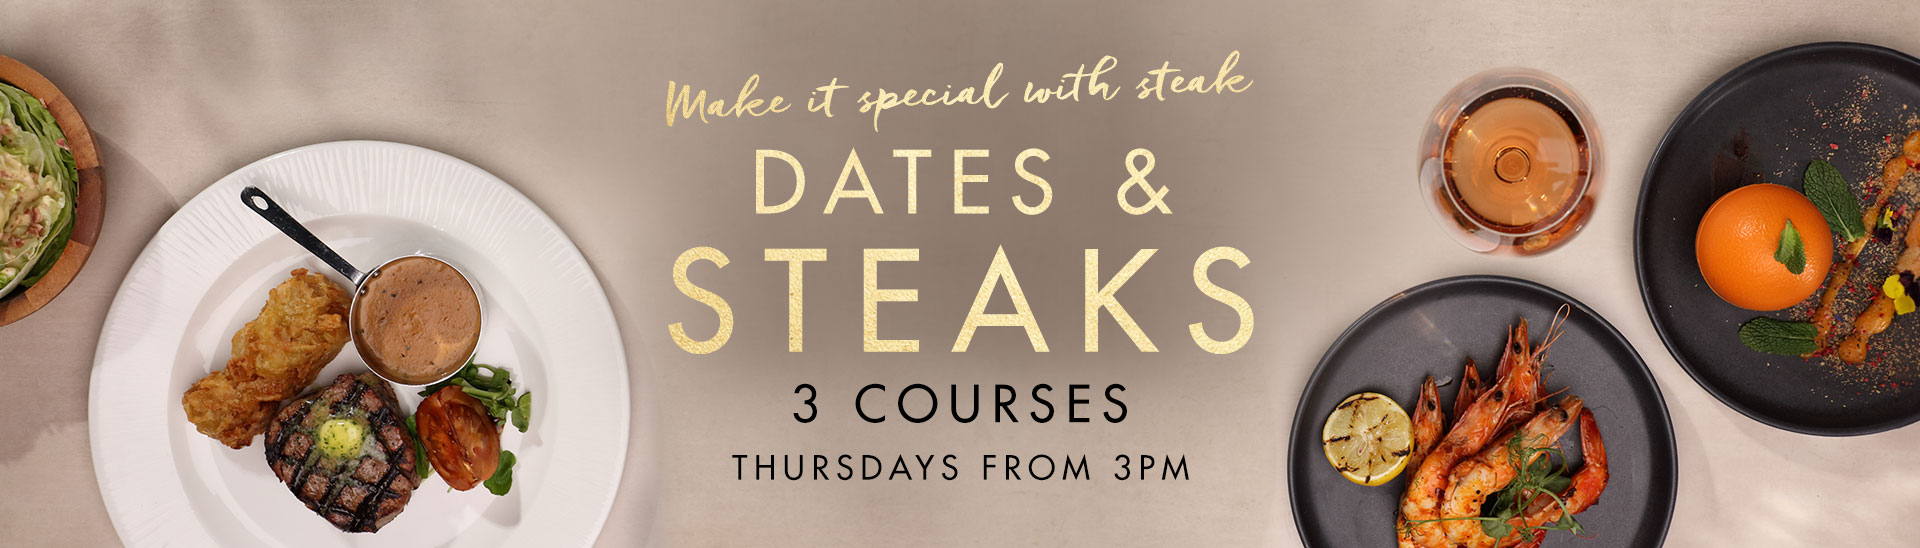 Dates & Steaks at Miller & Carter Southampton